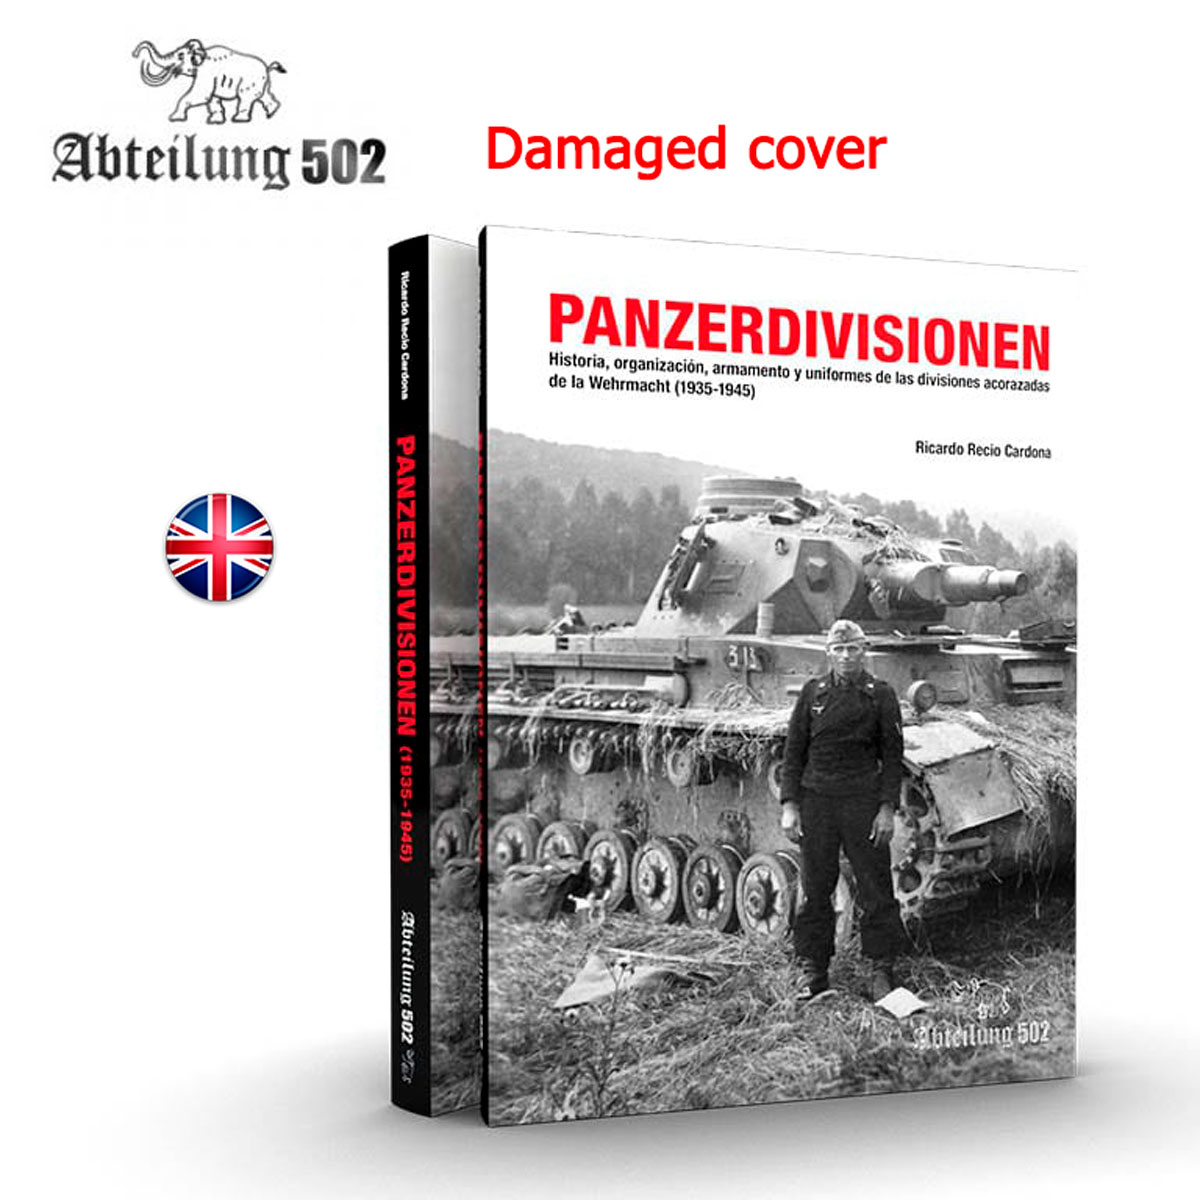 PANZERDIVISIONEN (Damaged cover)